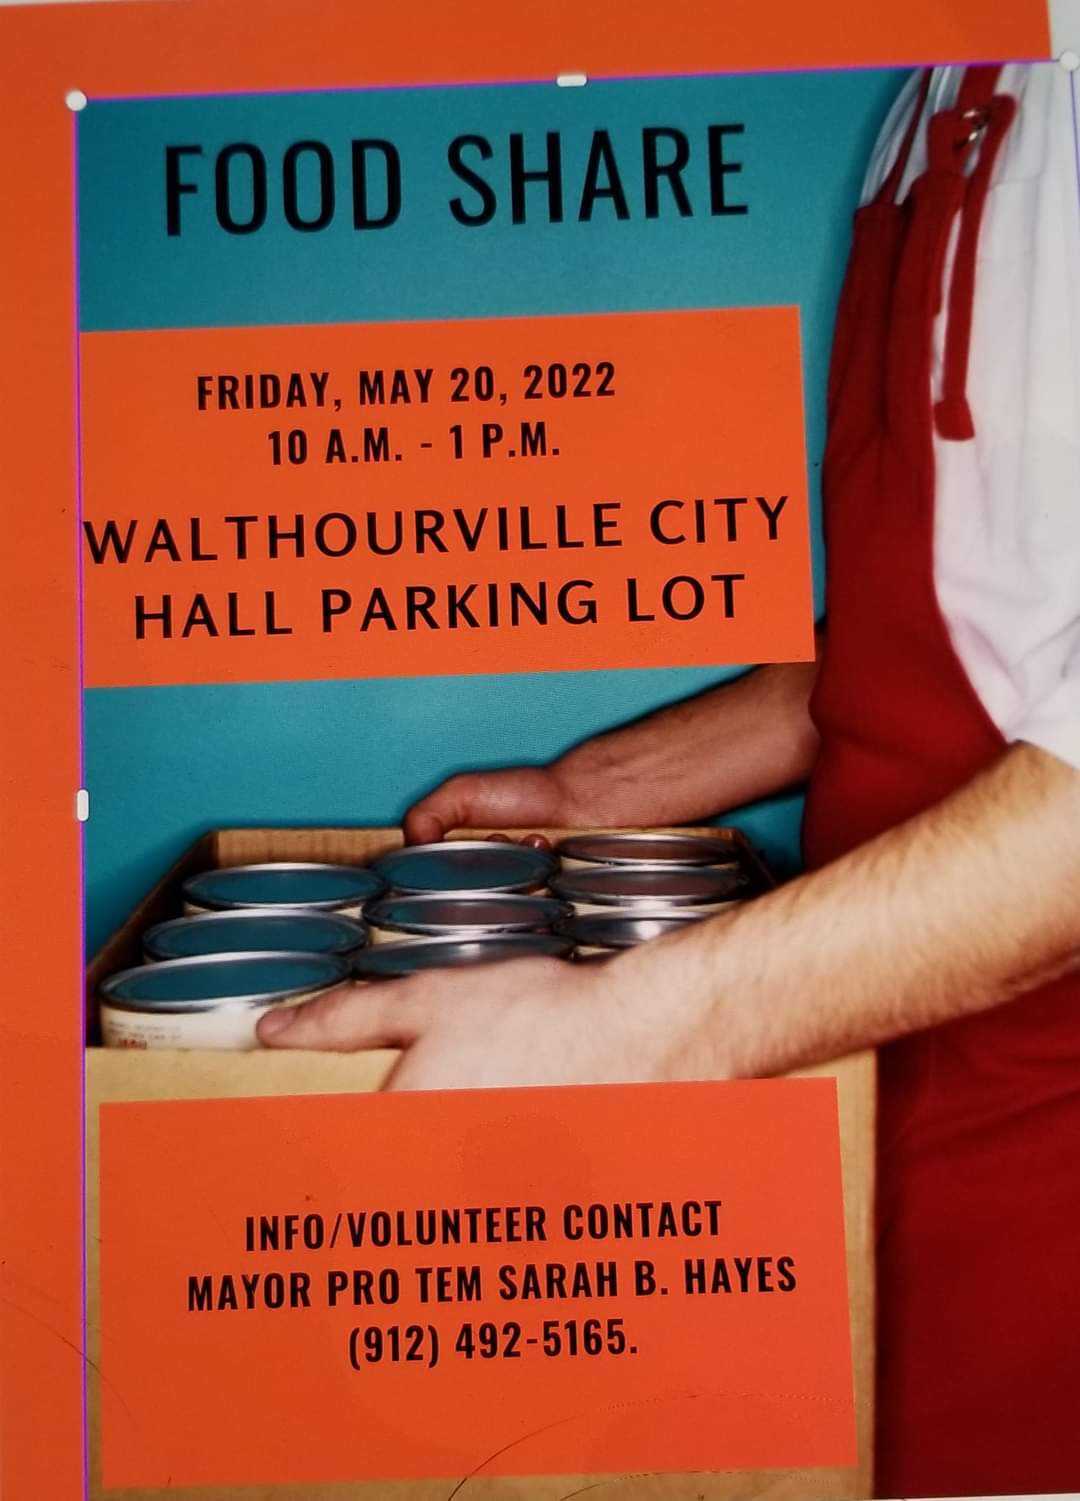 Food share drive Walthourville City Hall